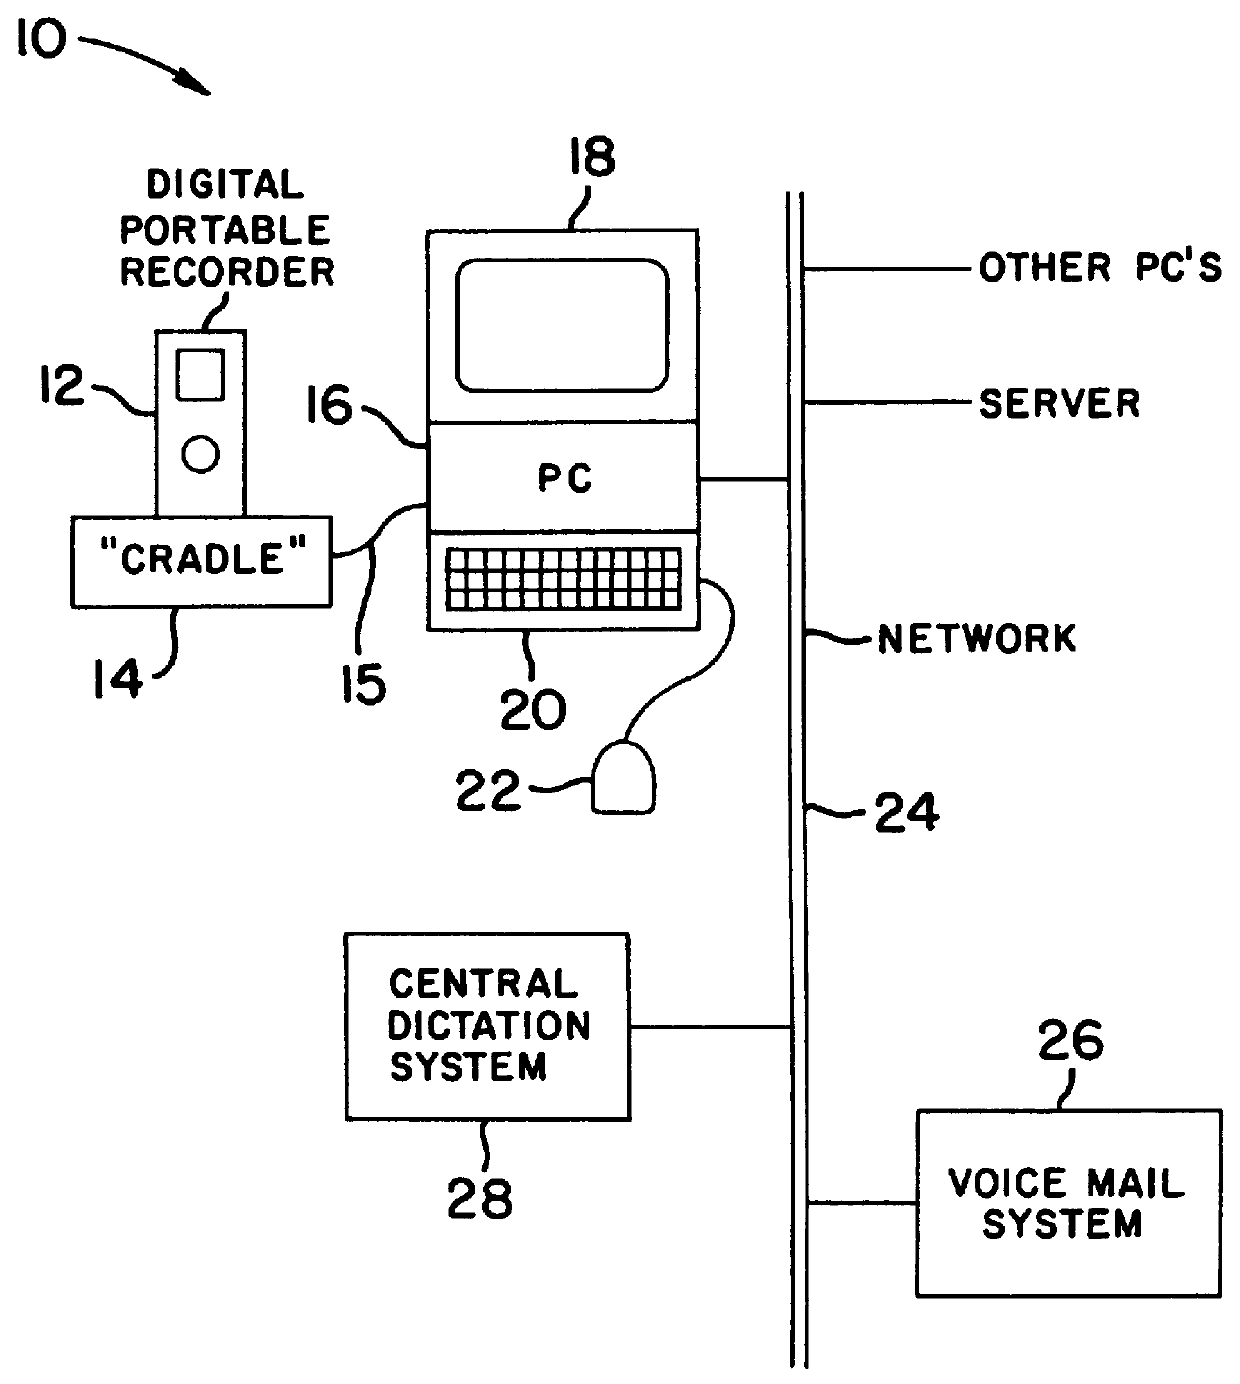 Portable digital audio recorder with adaptive control configurations